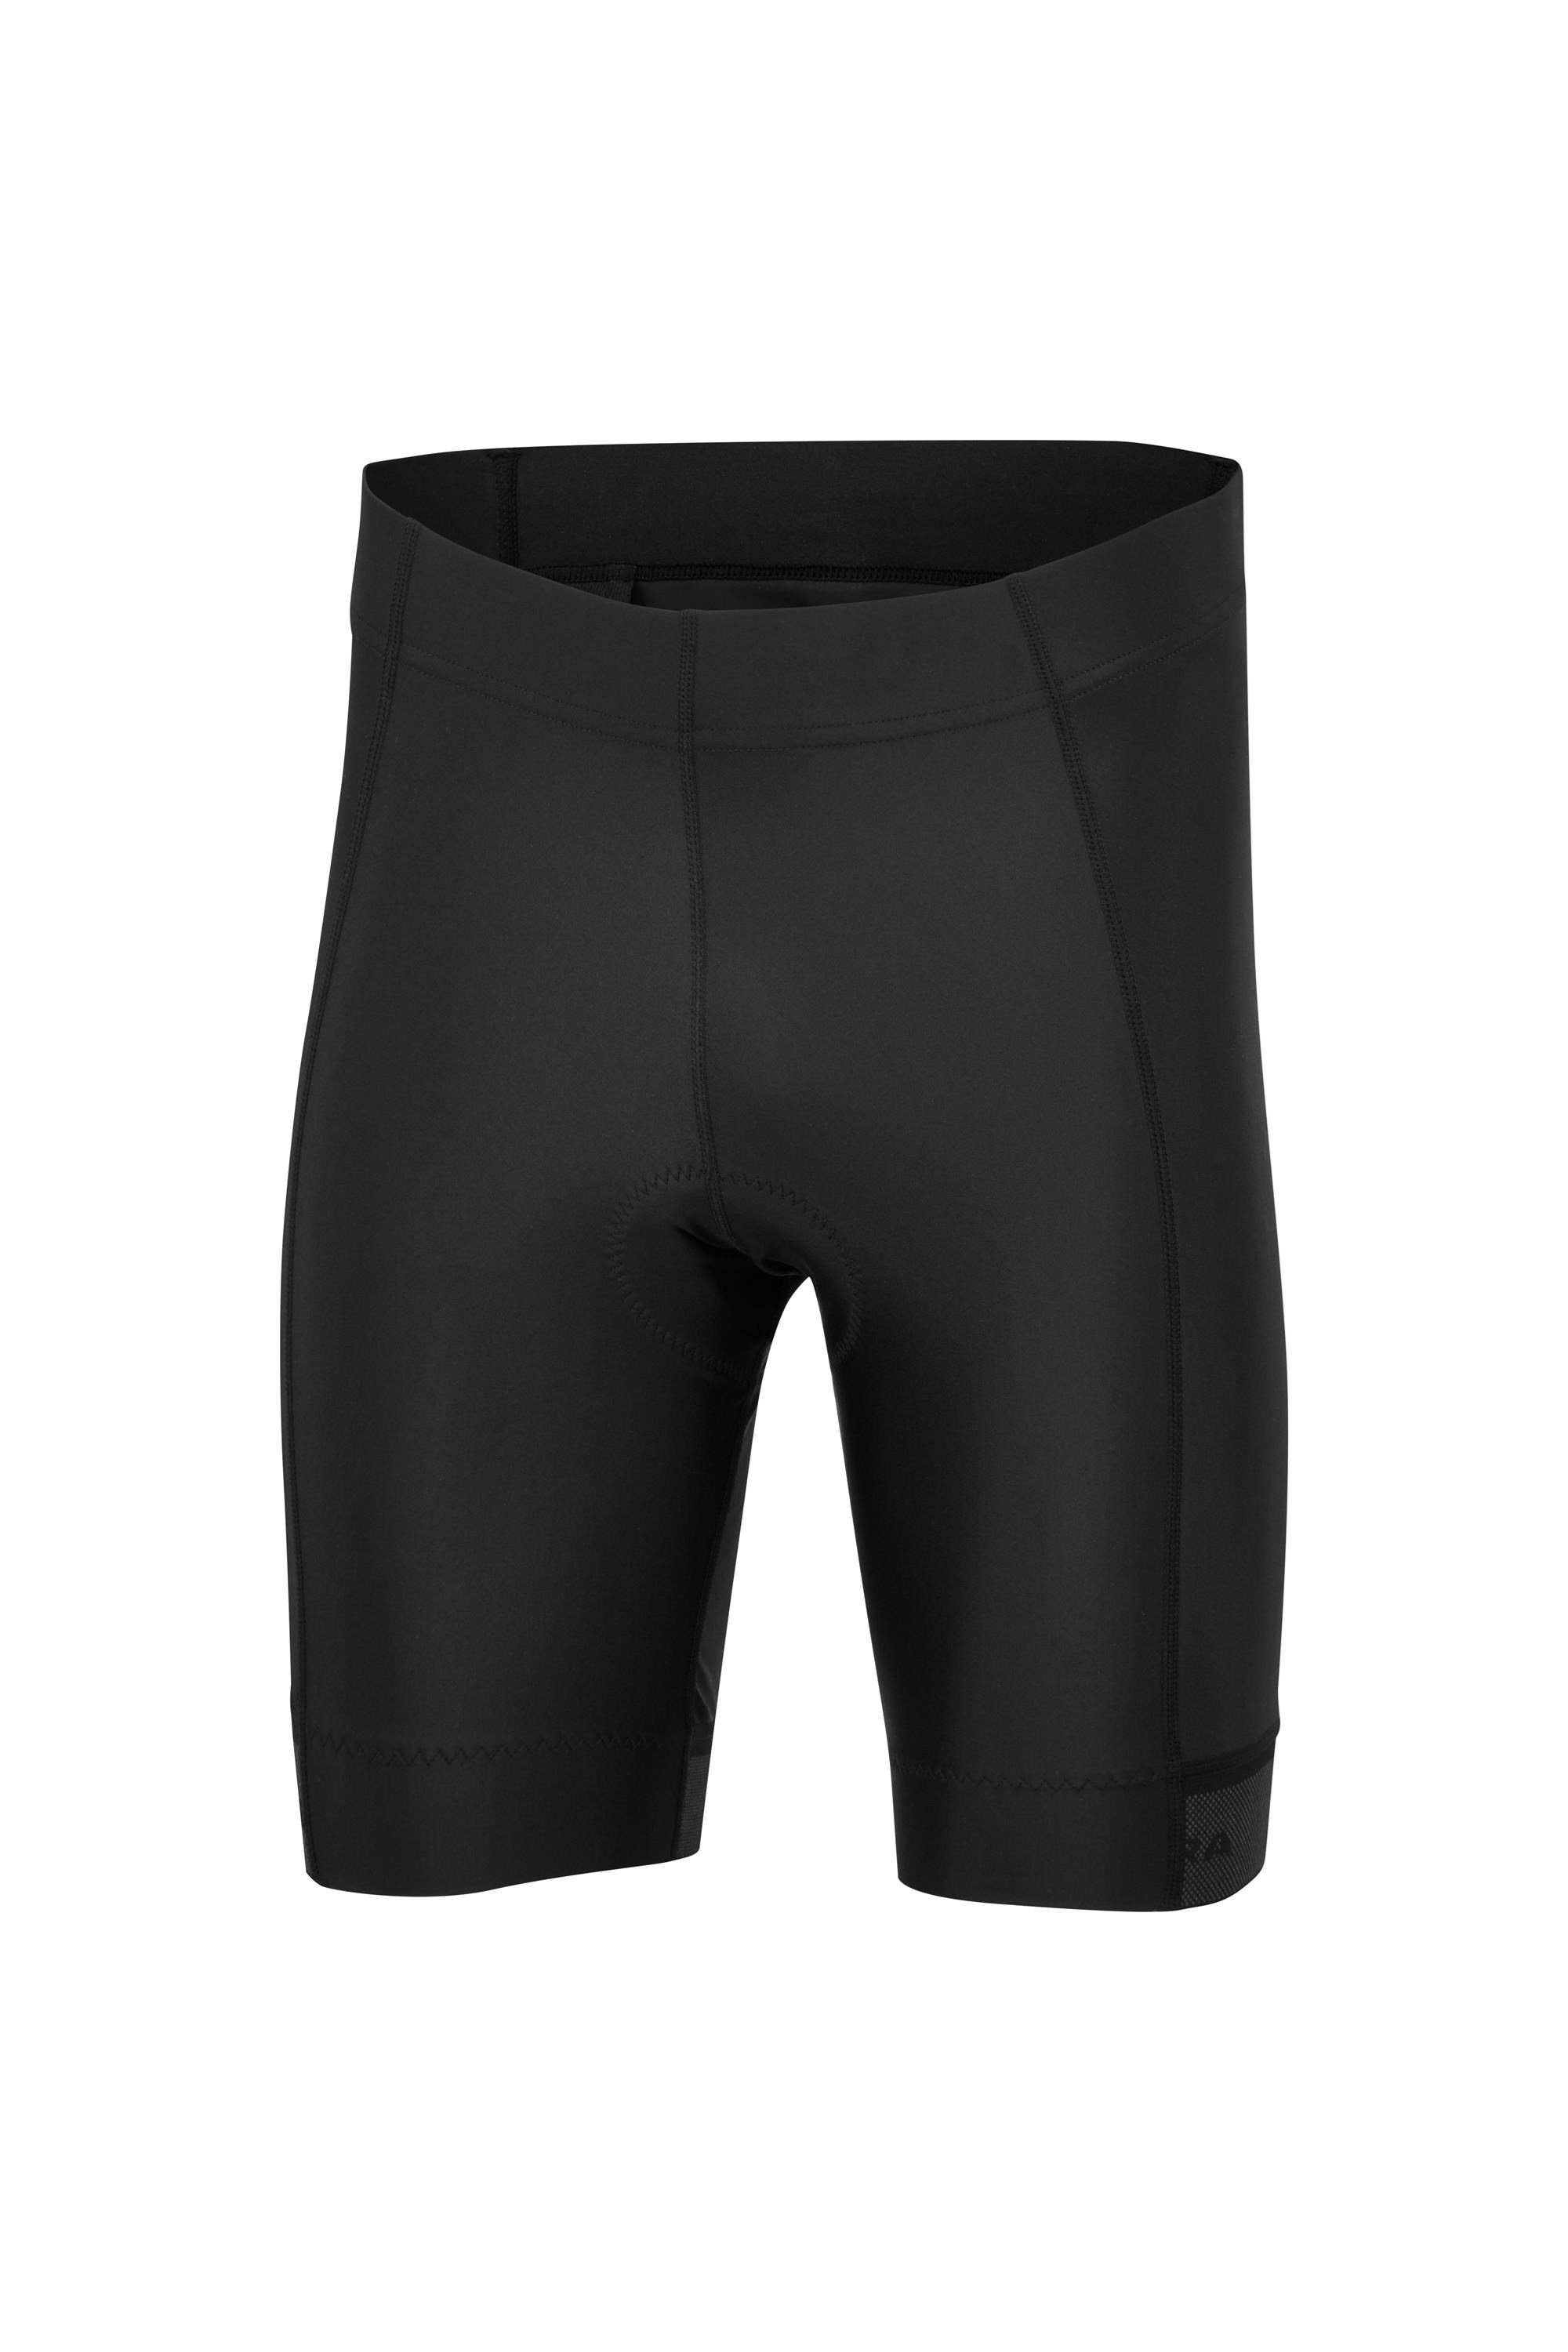 Progel Plus Mens Cycling Waist Shorts -